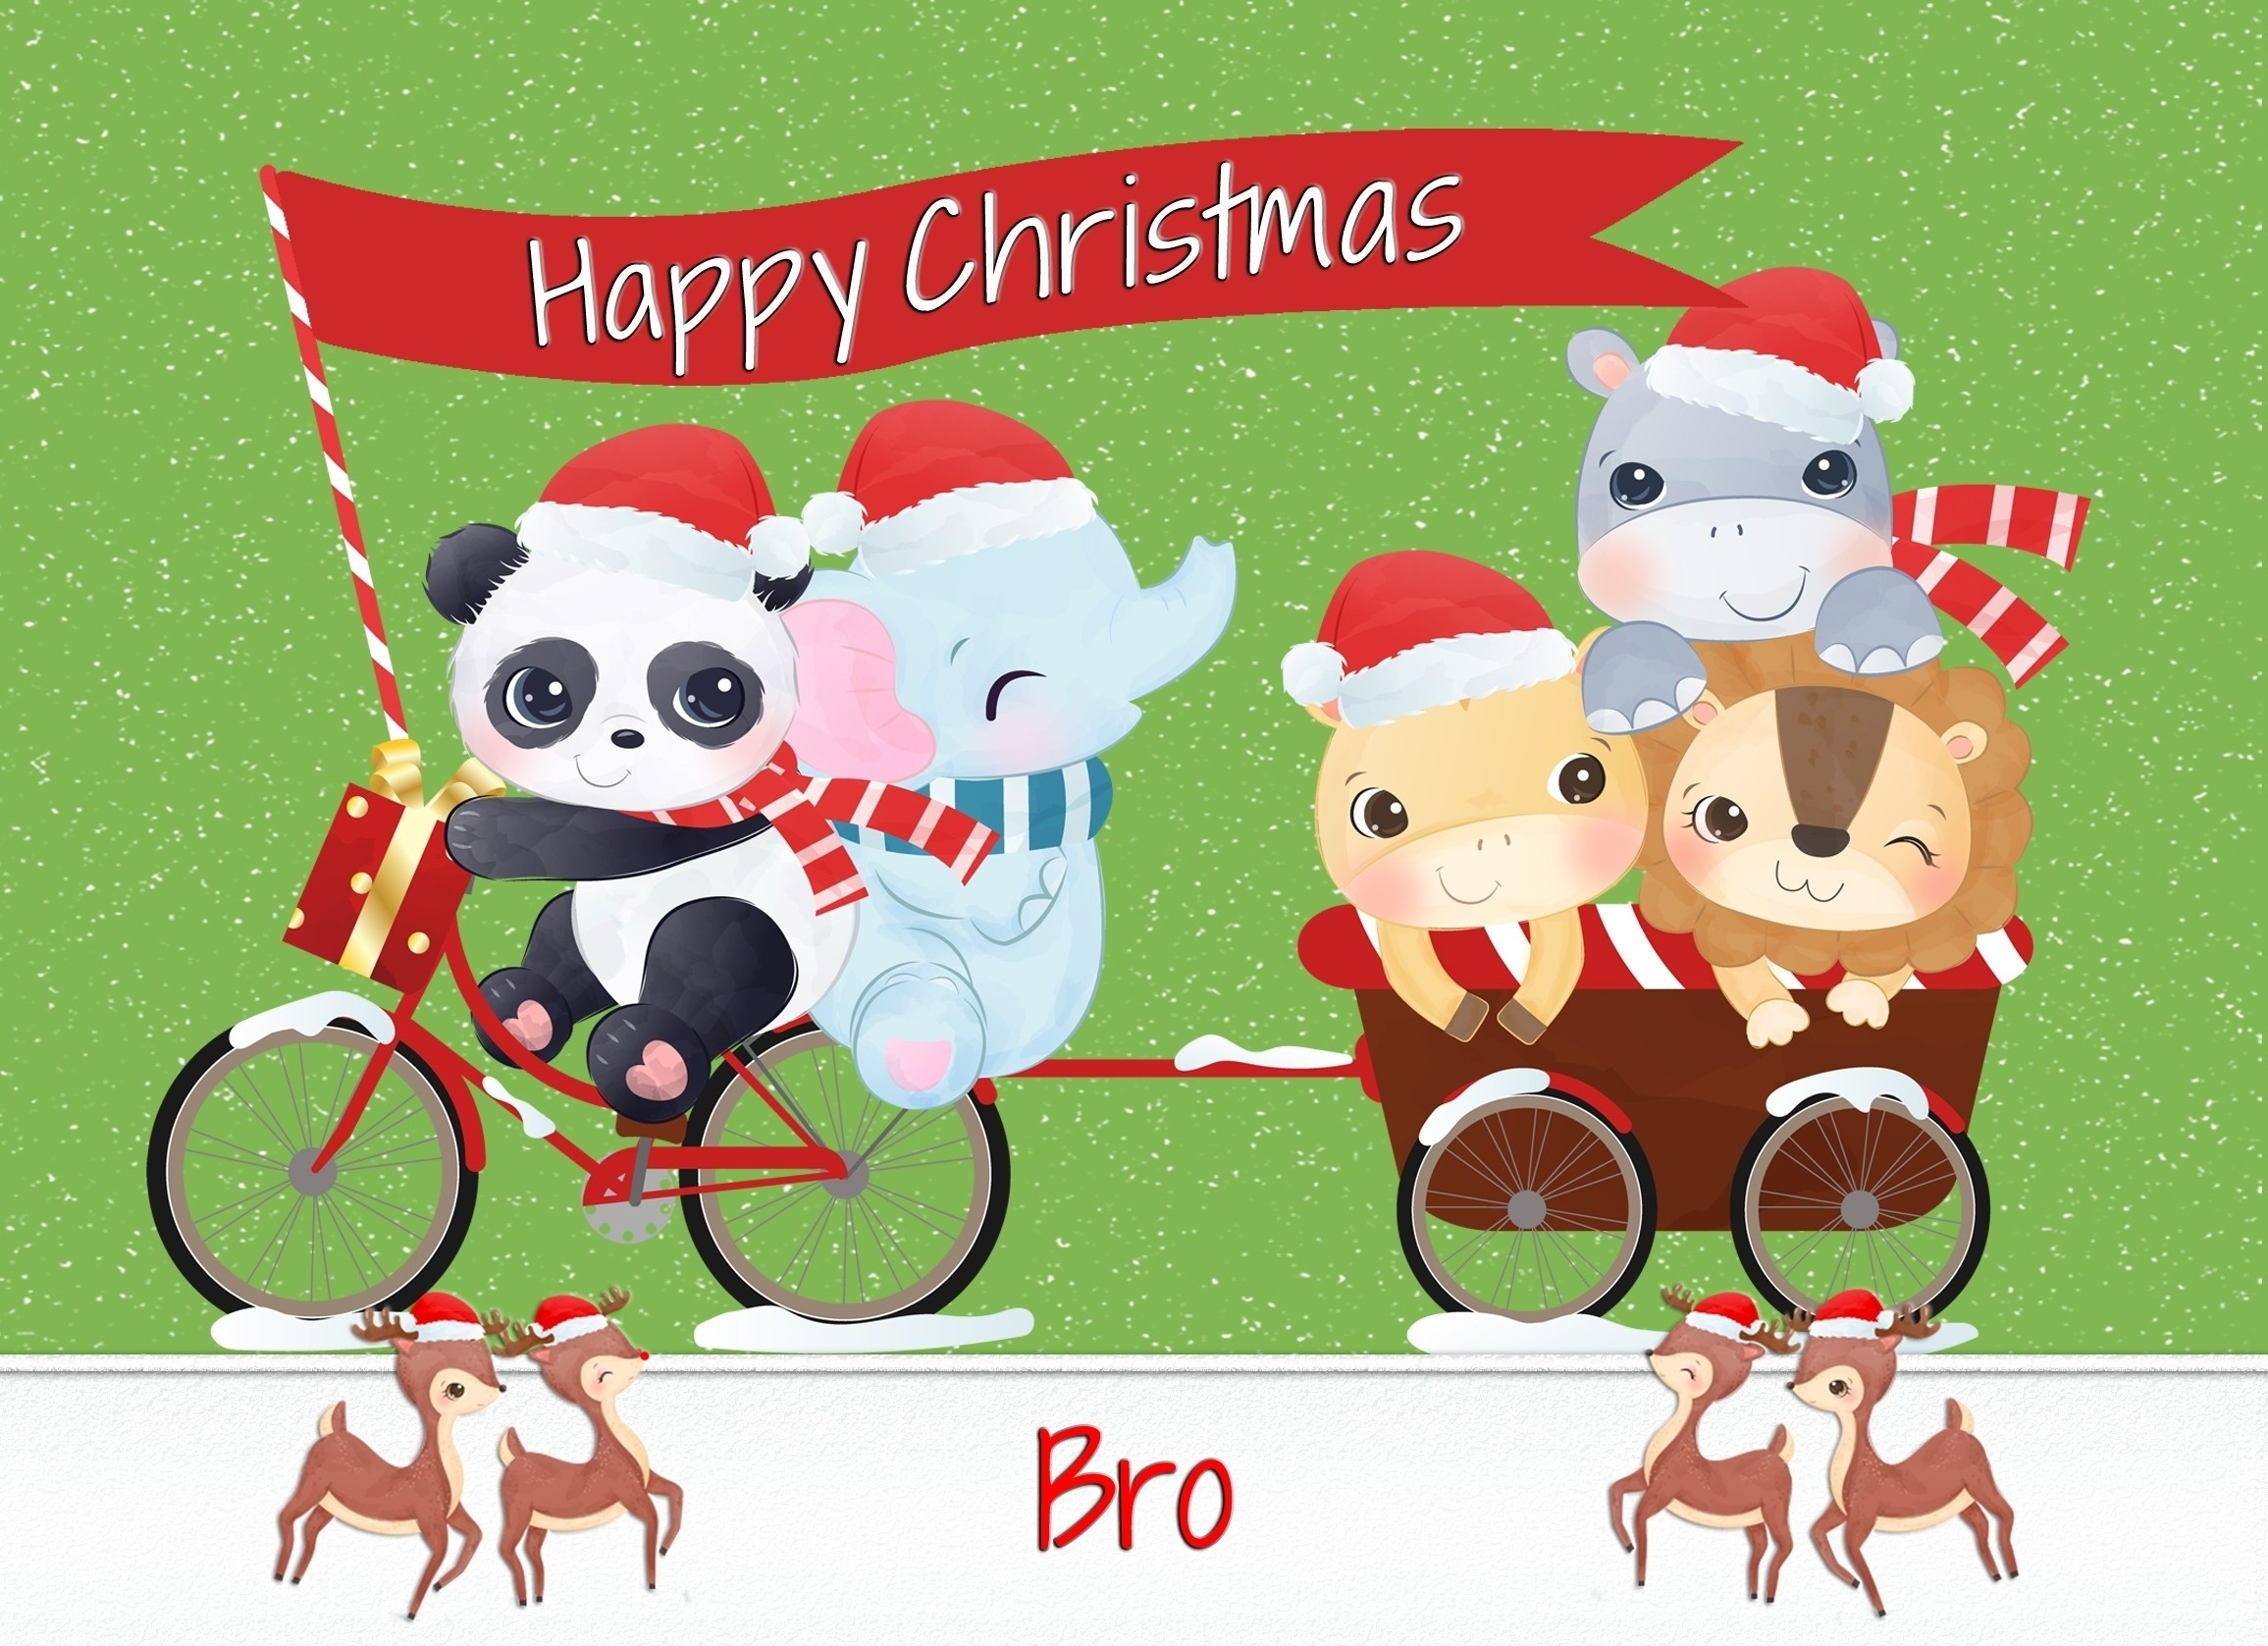 Christmas Card For Bro (Green Animals)